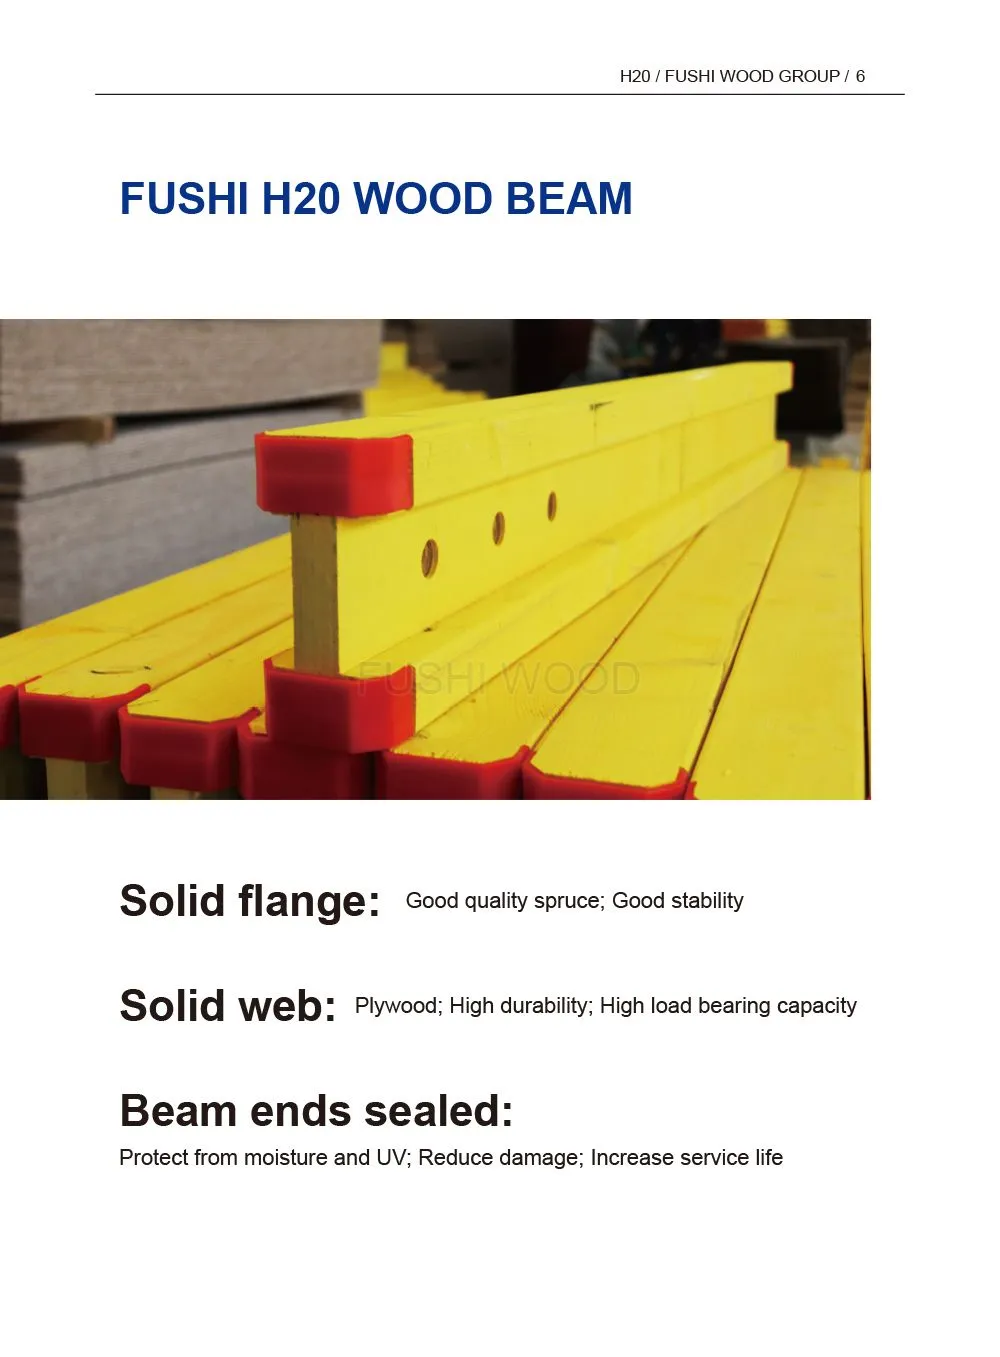 H20 wood beam size 2.9 & 3.9